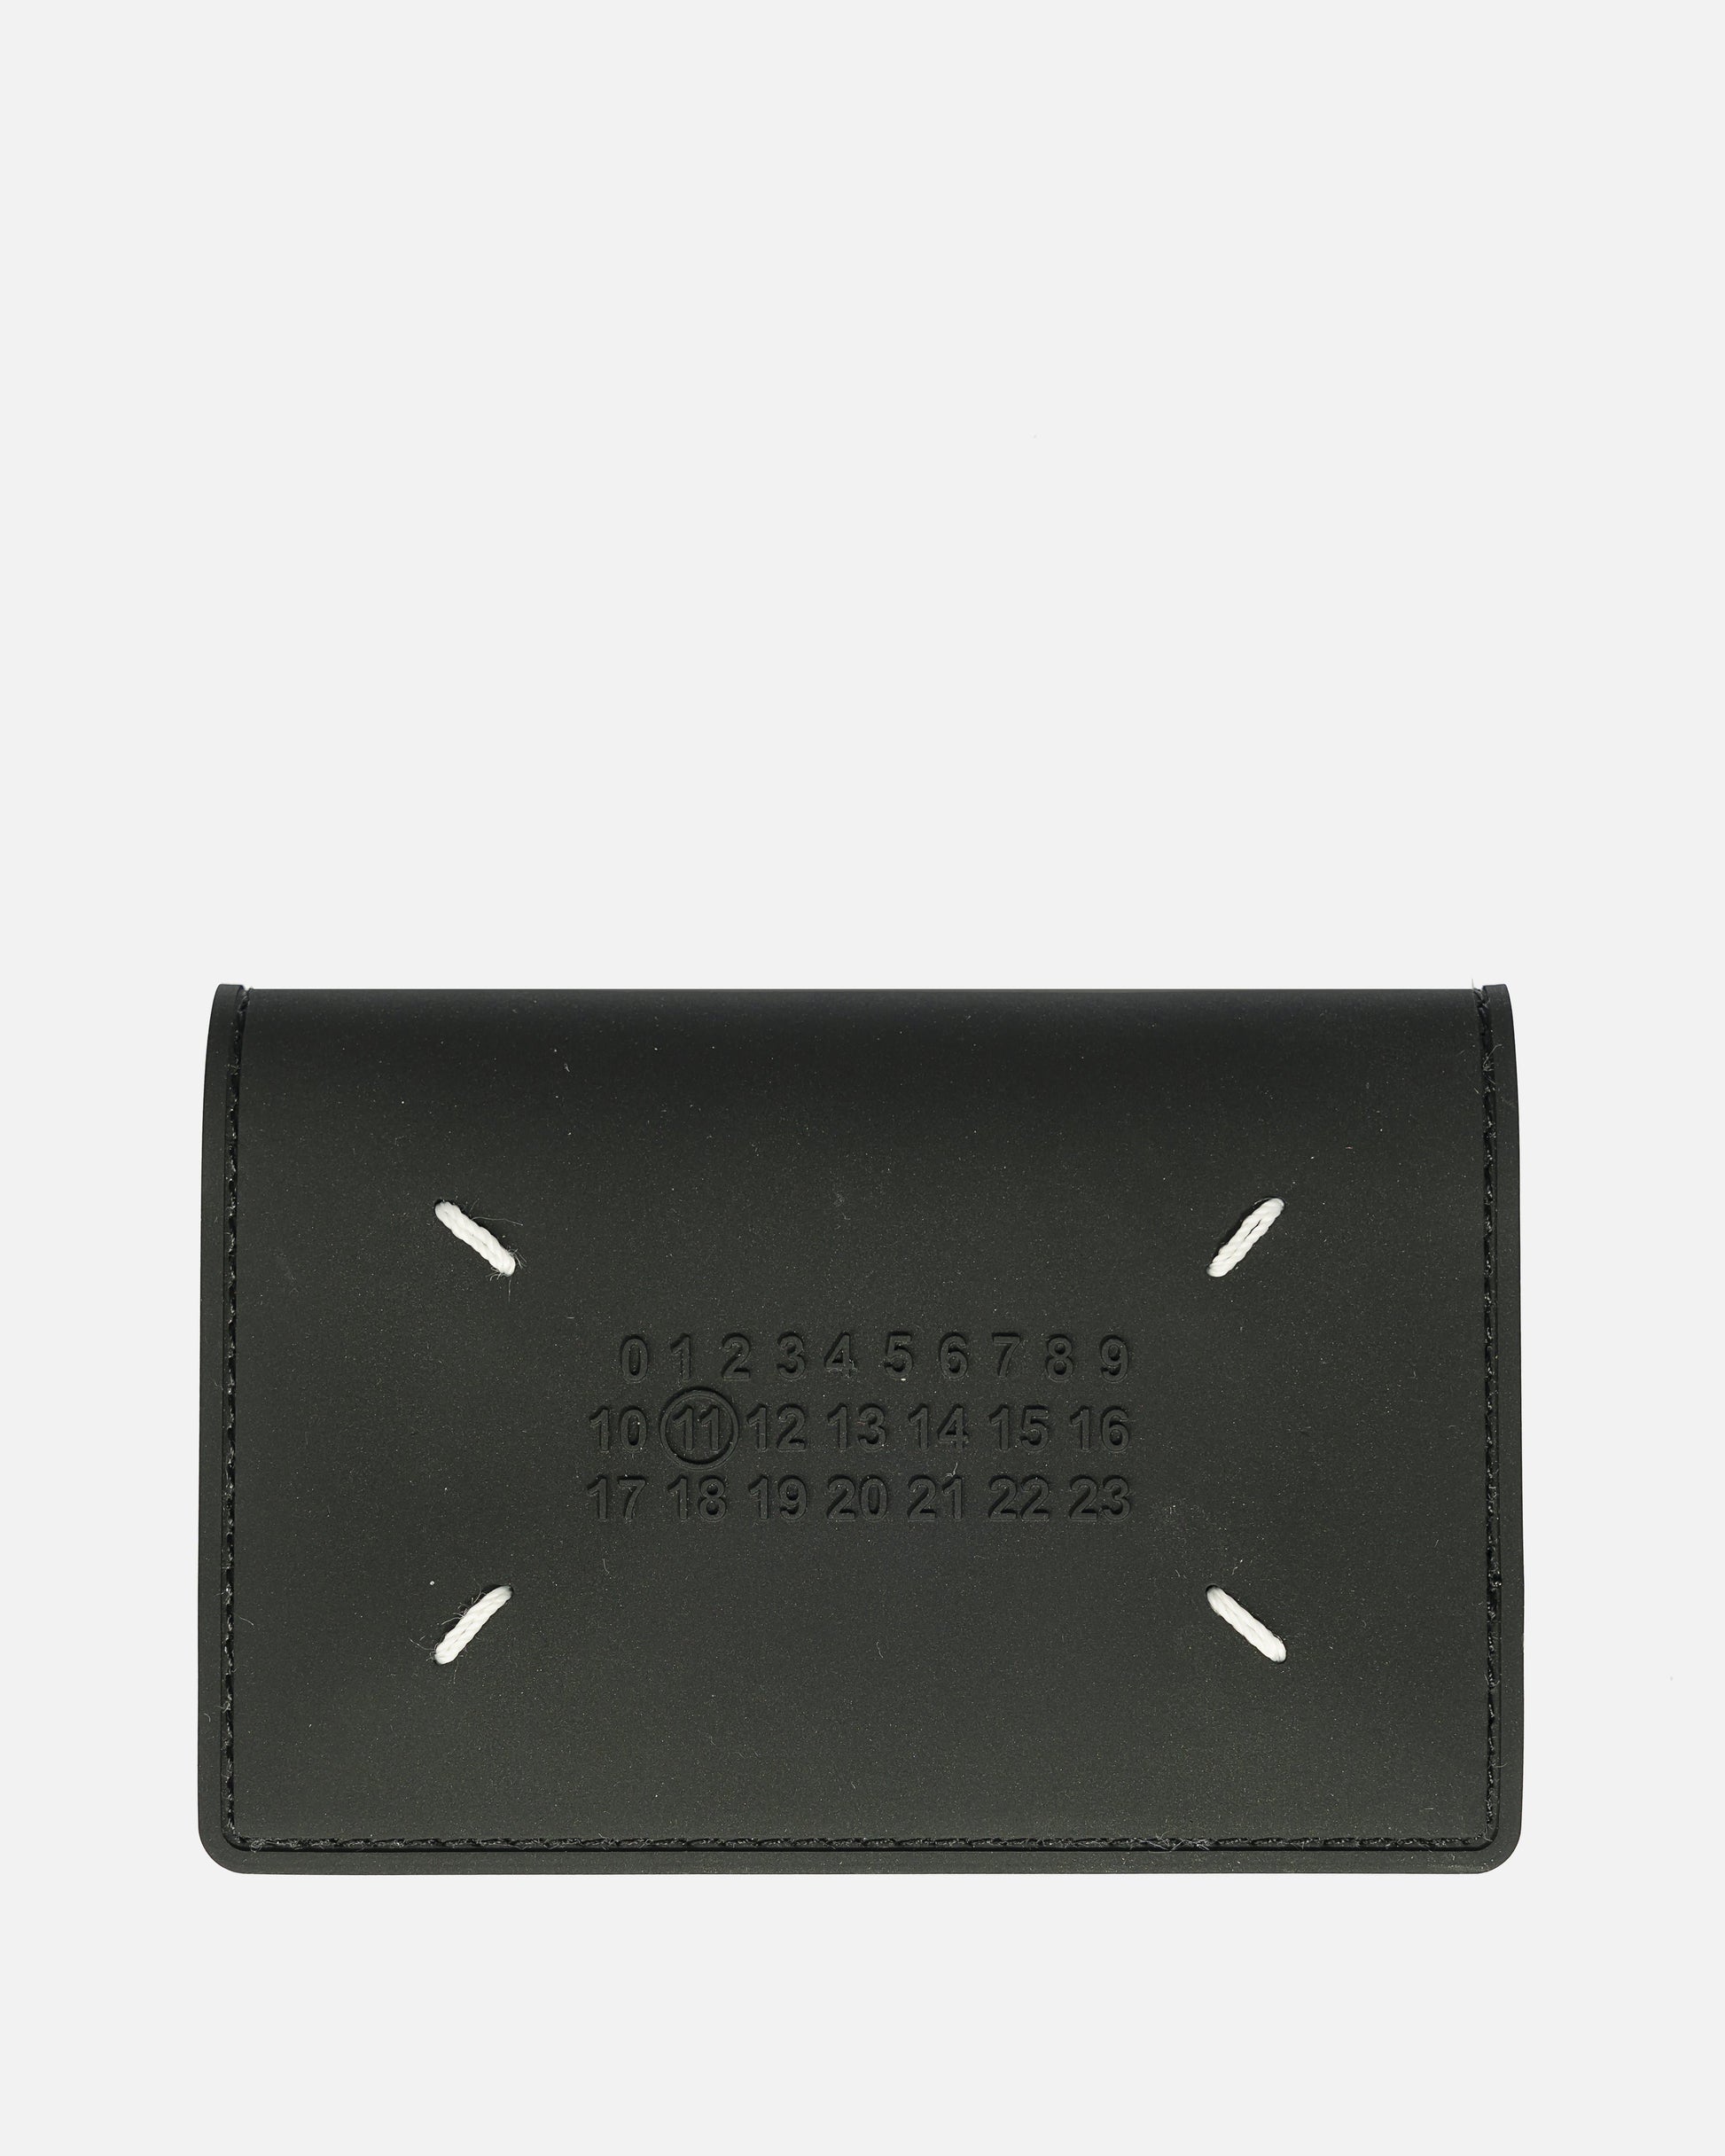 Maison Margiela Leather Goods Rubberized Fold Card Holder in Black